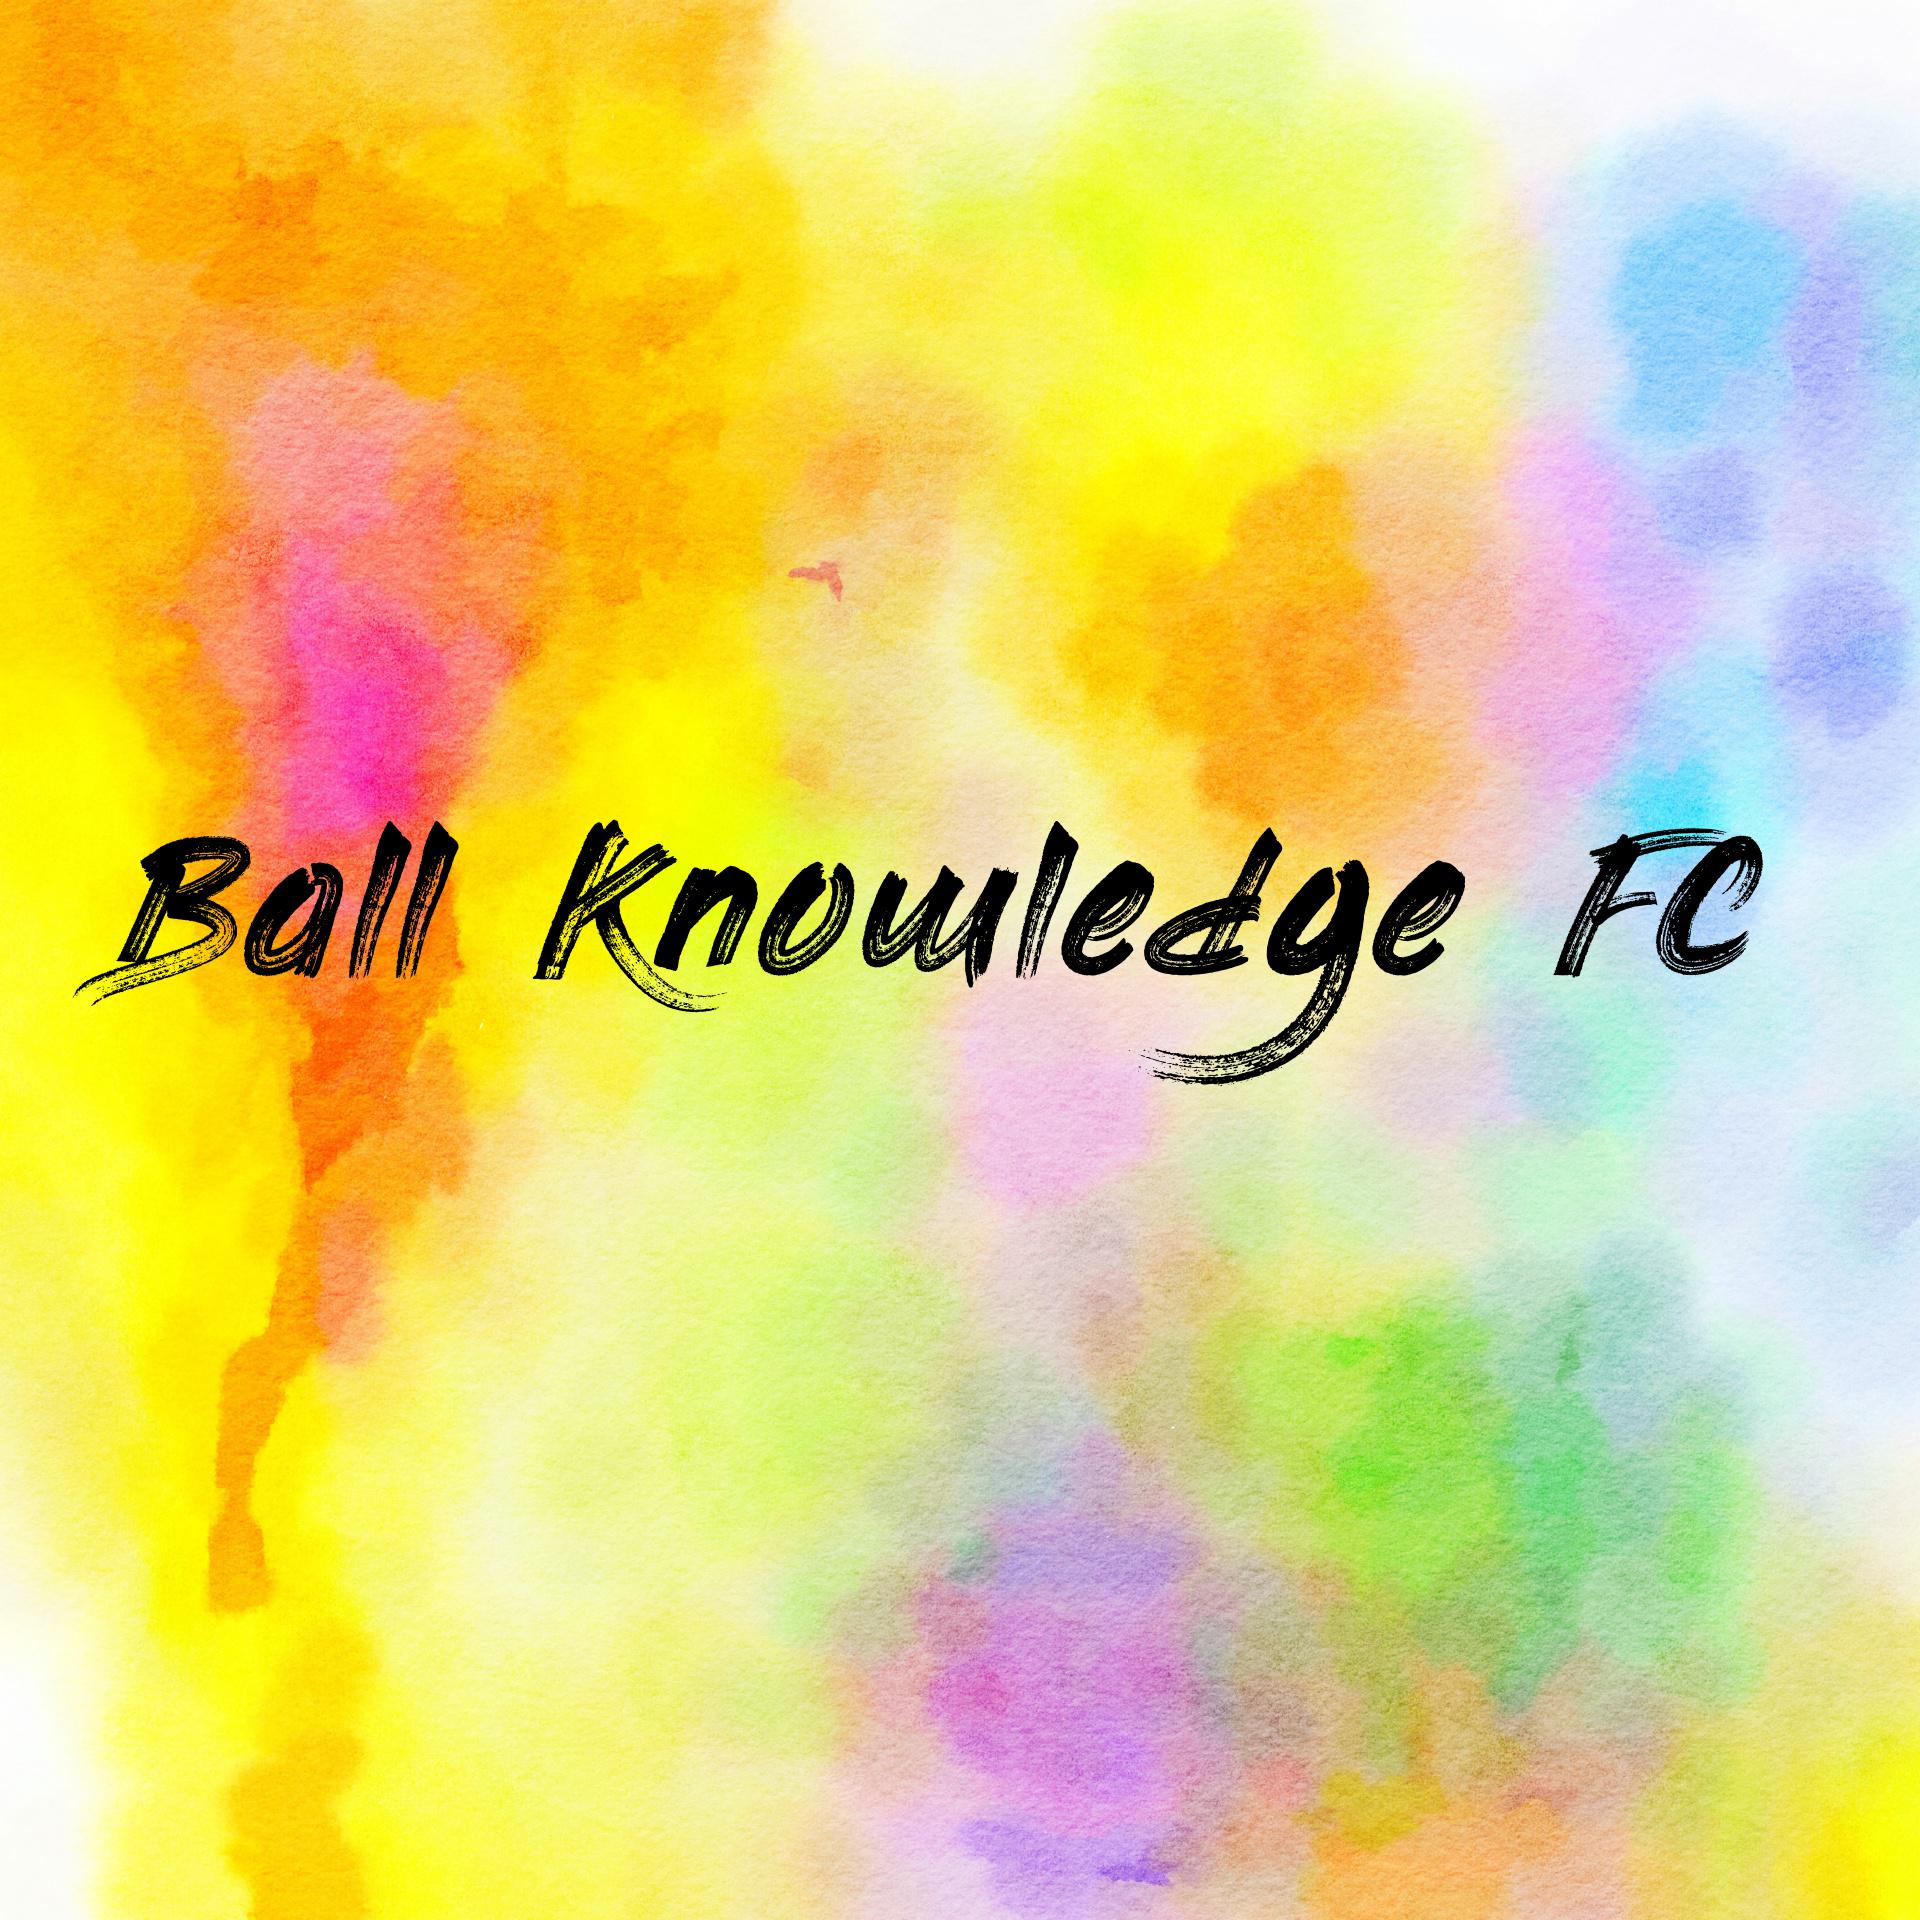 Ball Knowledge FC